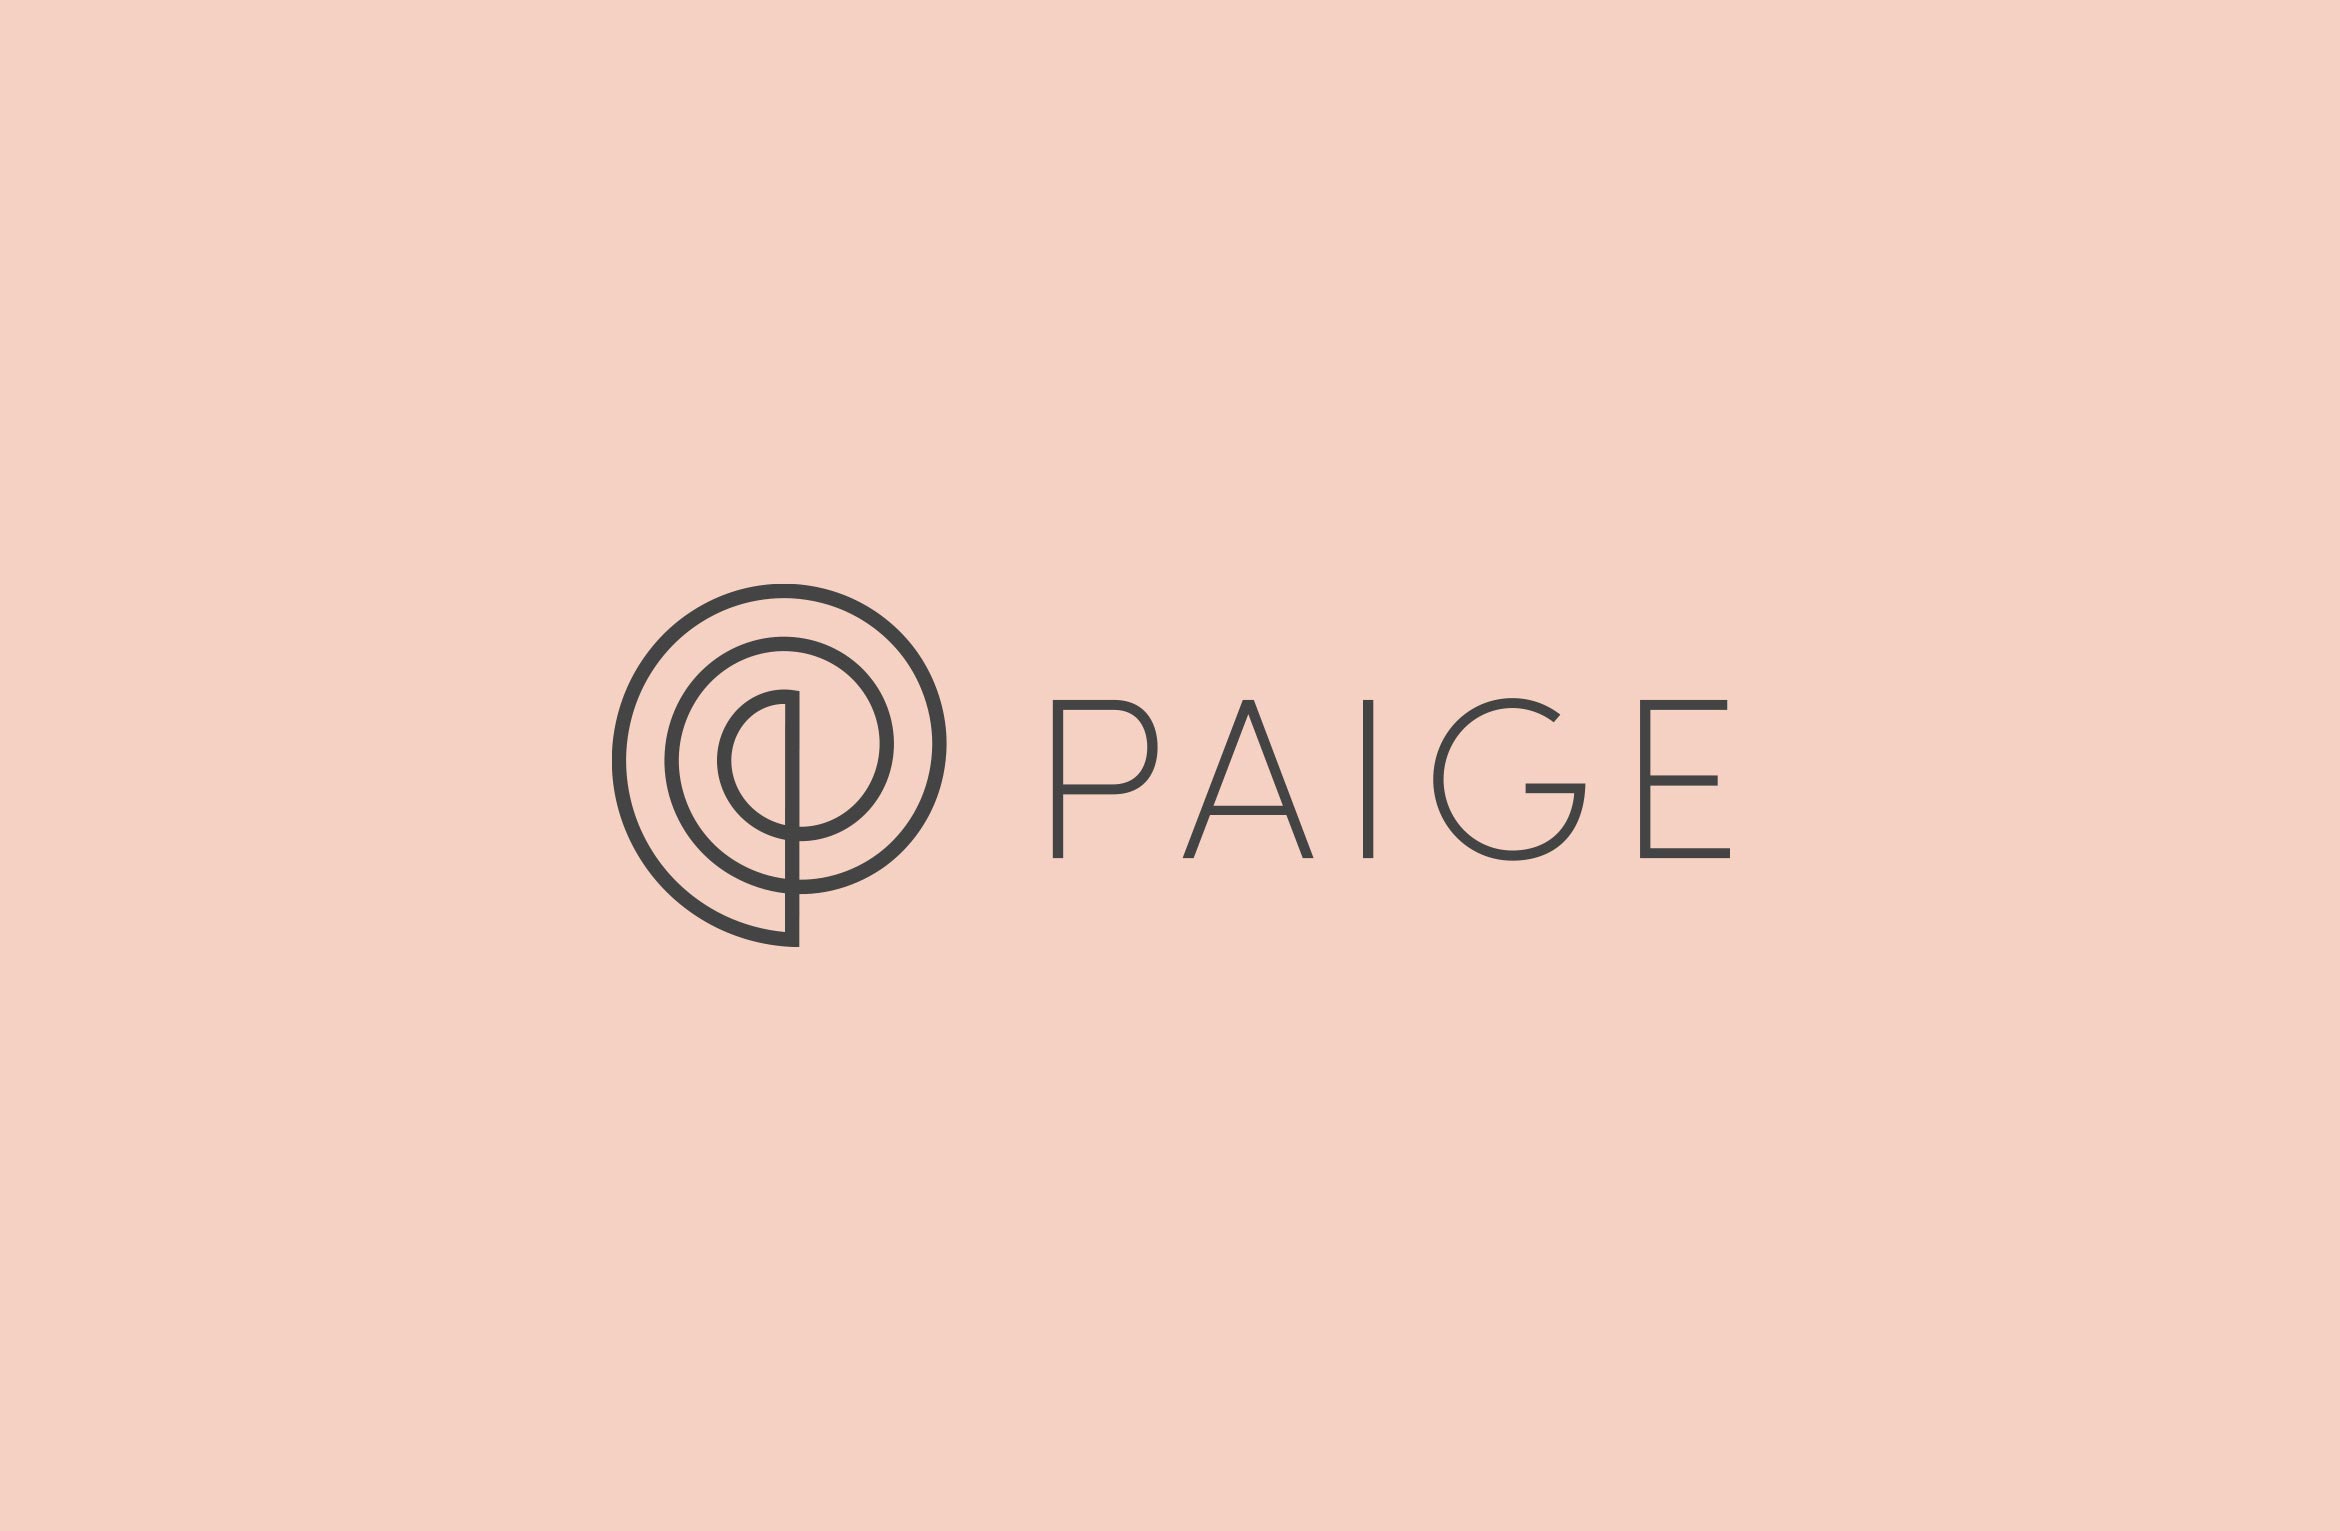 paige logo with P monogram designed like a fibonacci circle, charcoal on peach